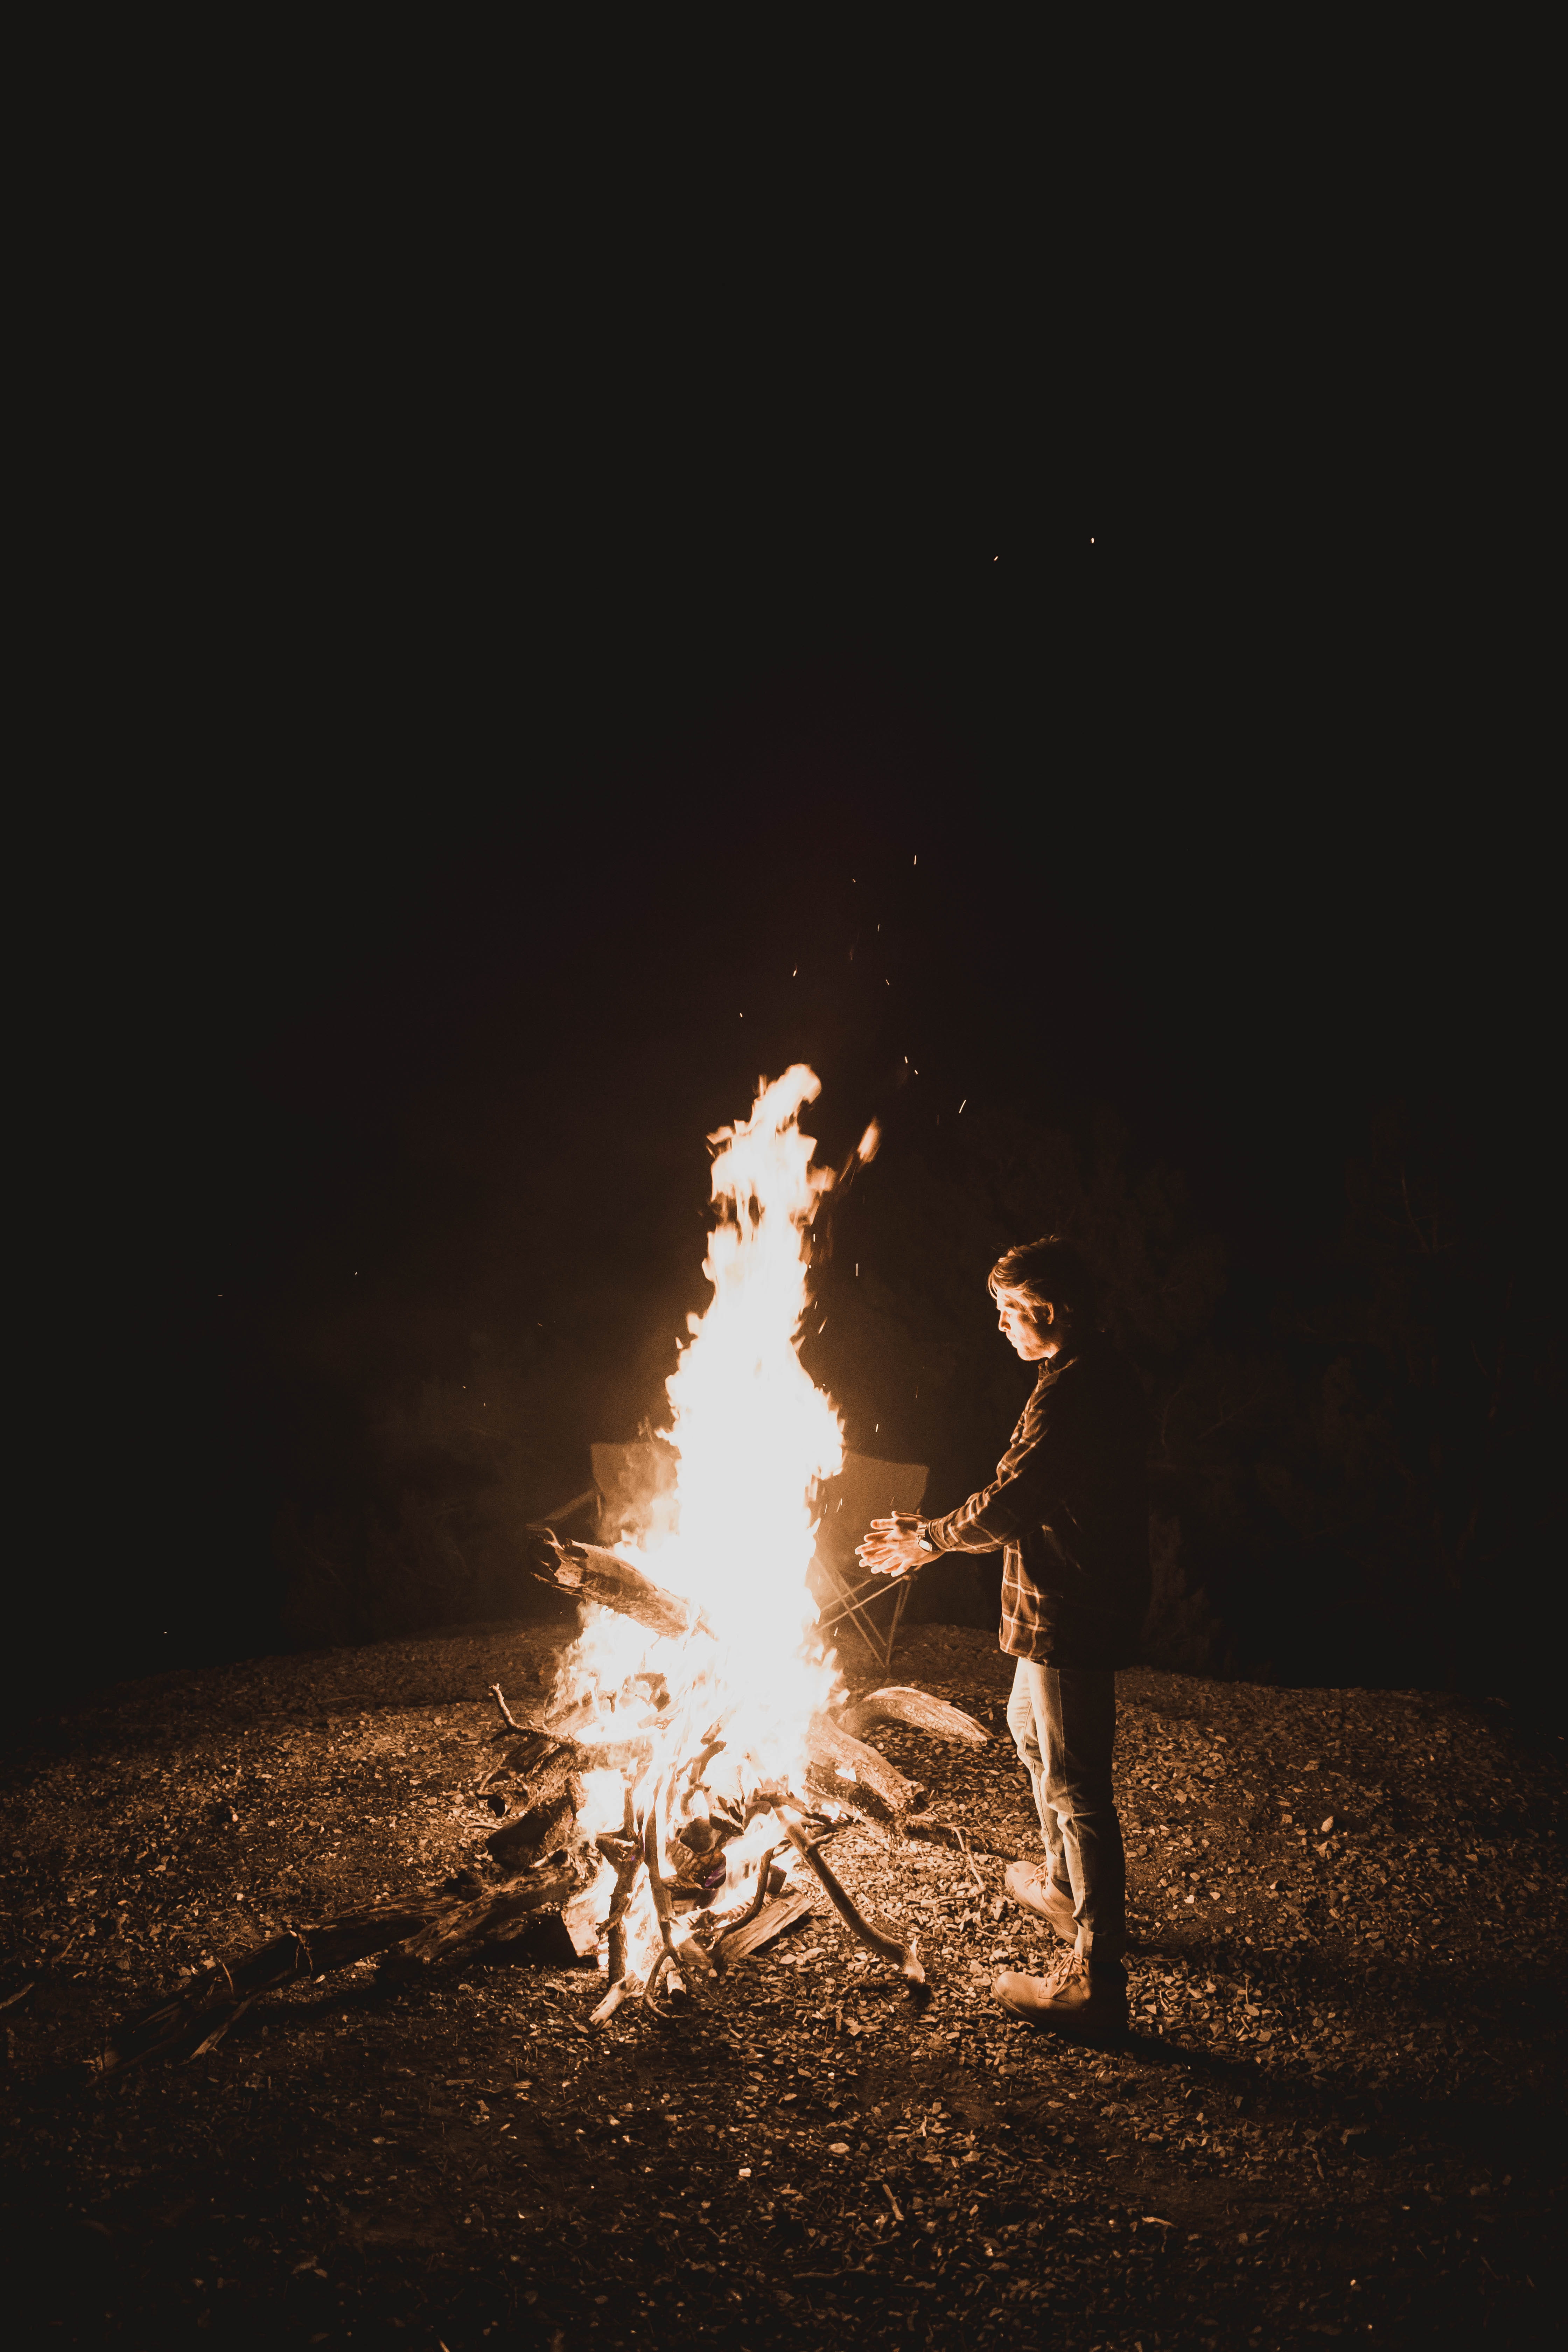 man standing near fire pit, human, person, bonfire, flame, night